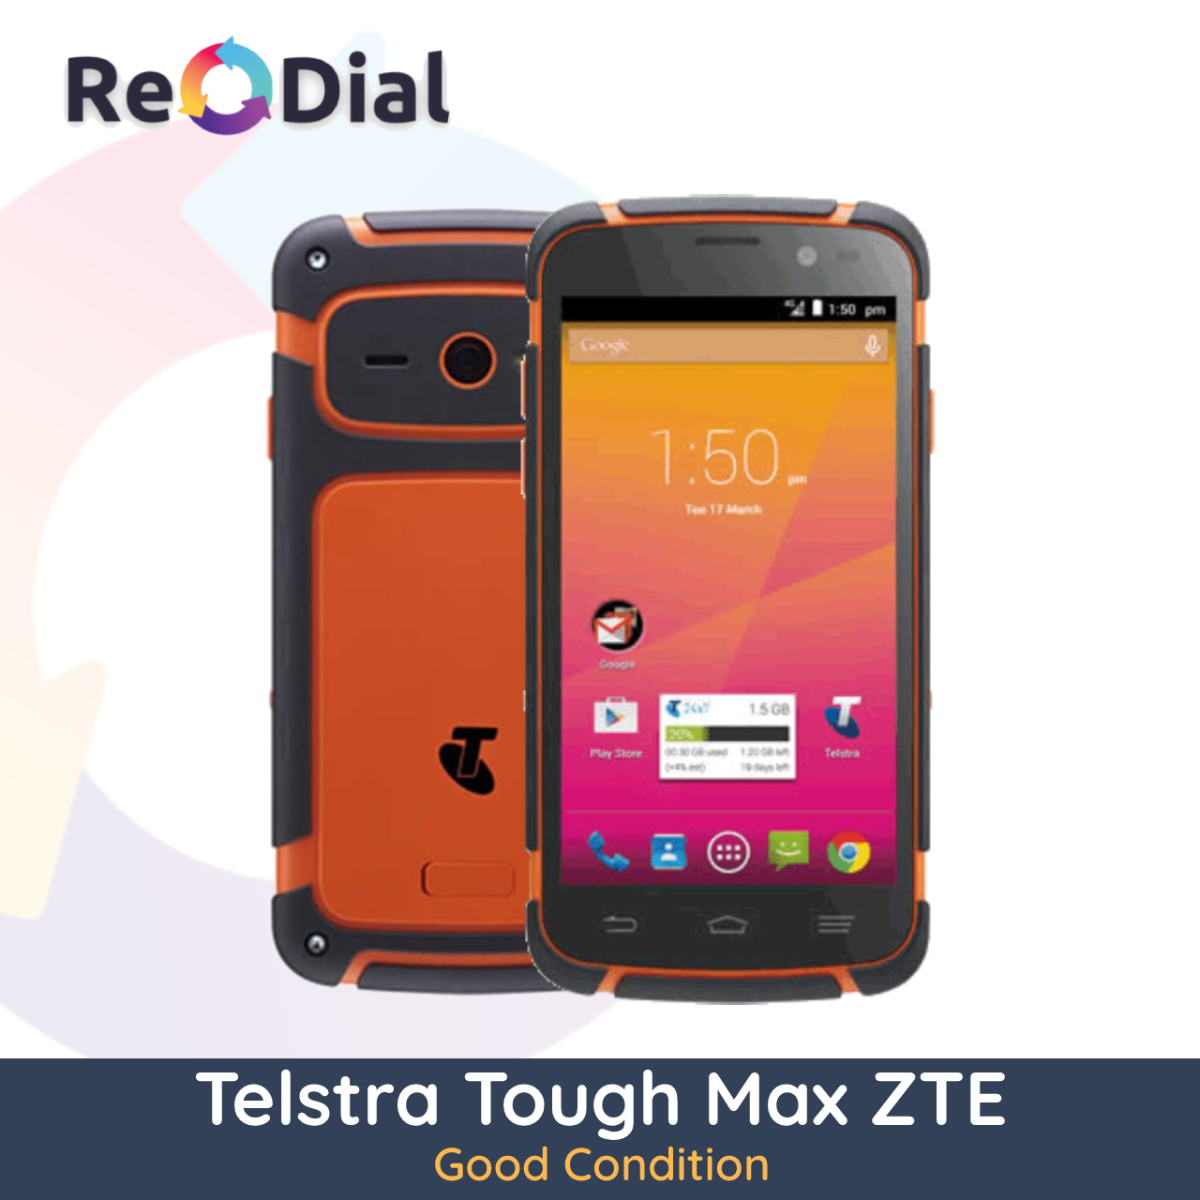 Telstra Tough Max ZTE T84 - Good Condition